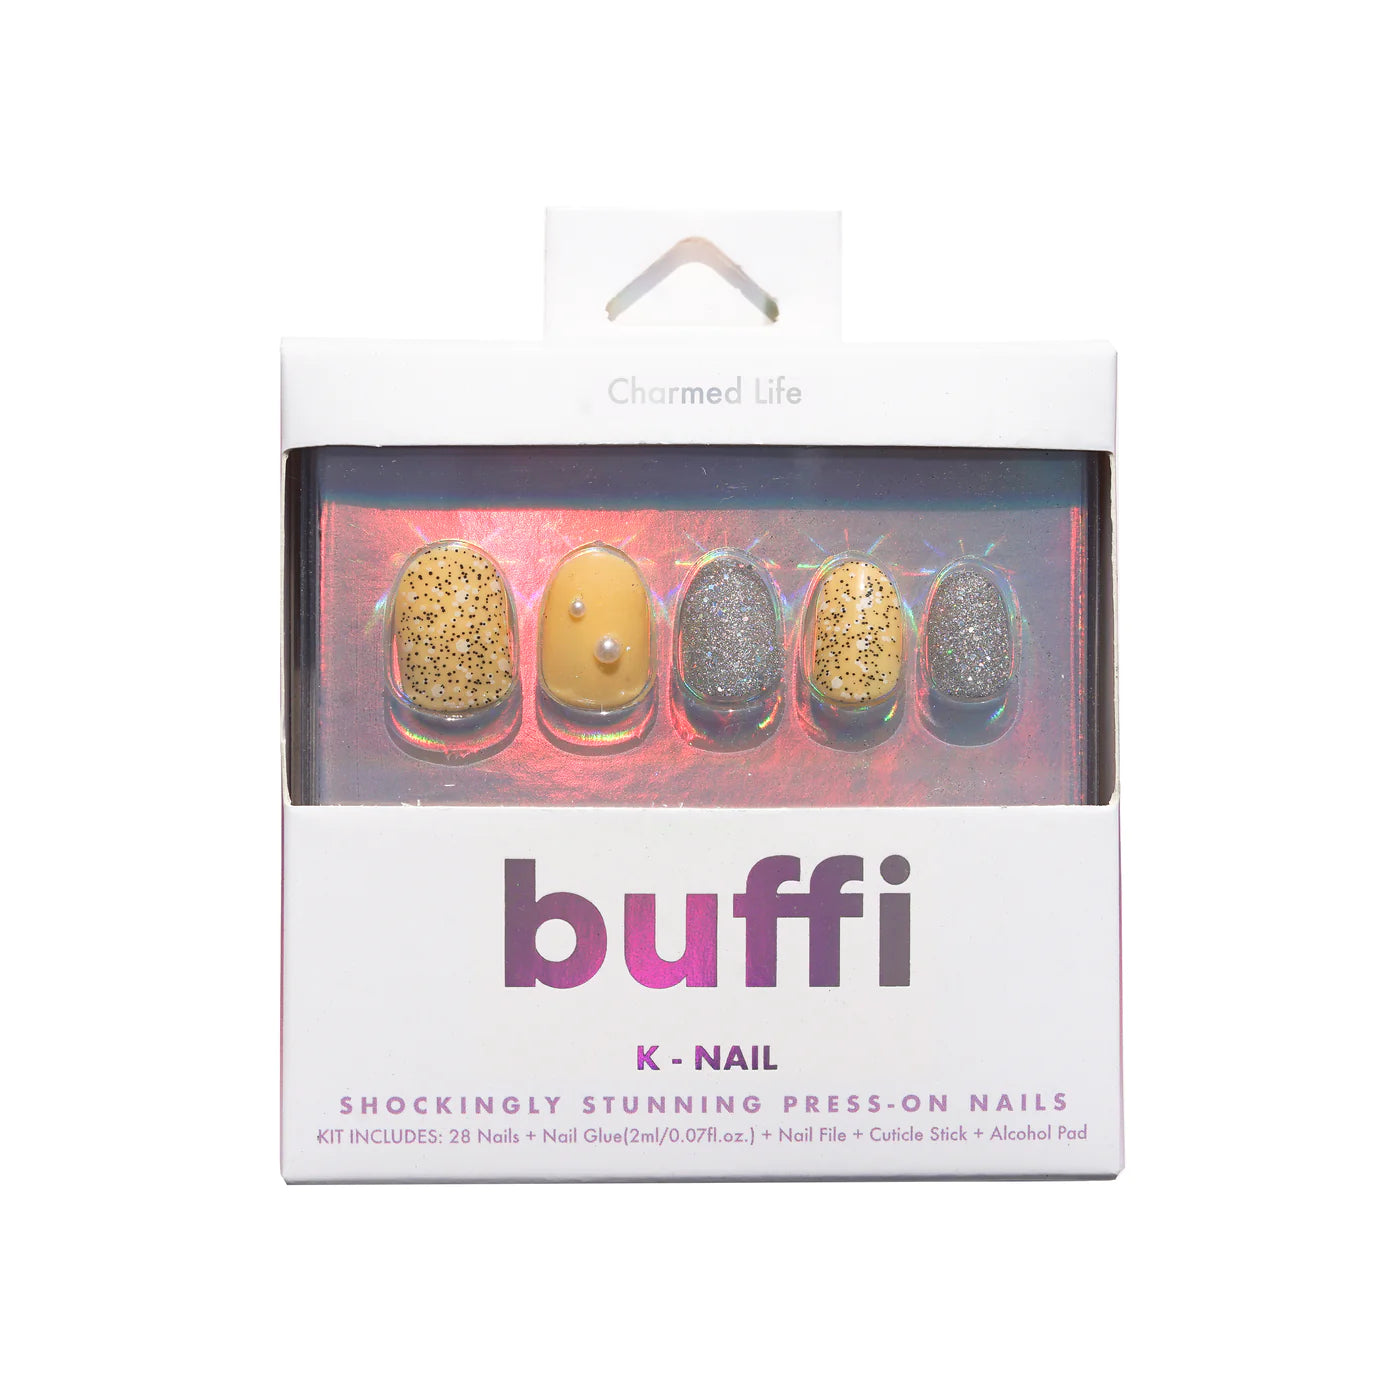 Kara Beauty - Buffi Press On Nails Charmed Life